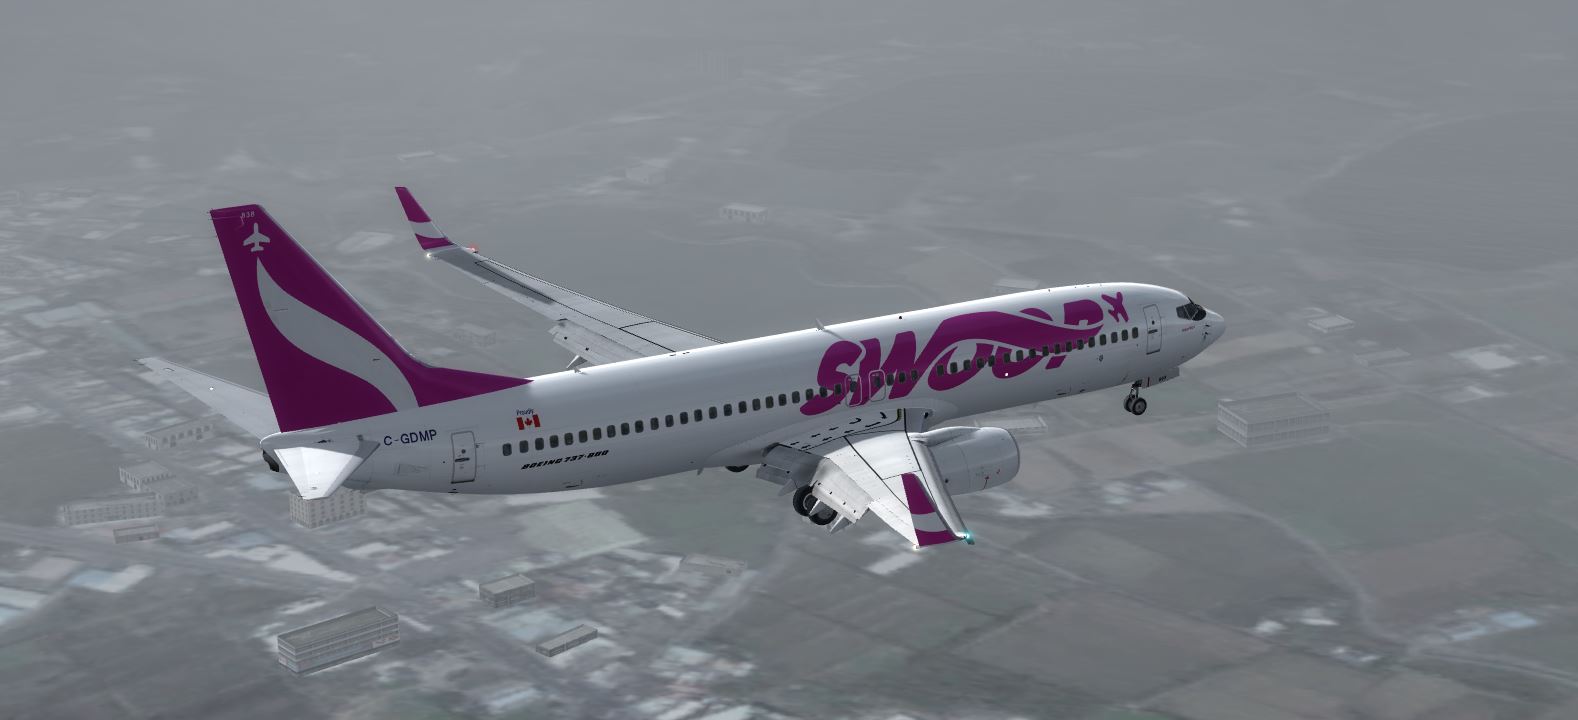 B737-800 Swoop Airlines-819 